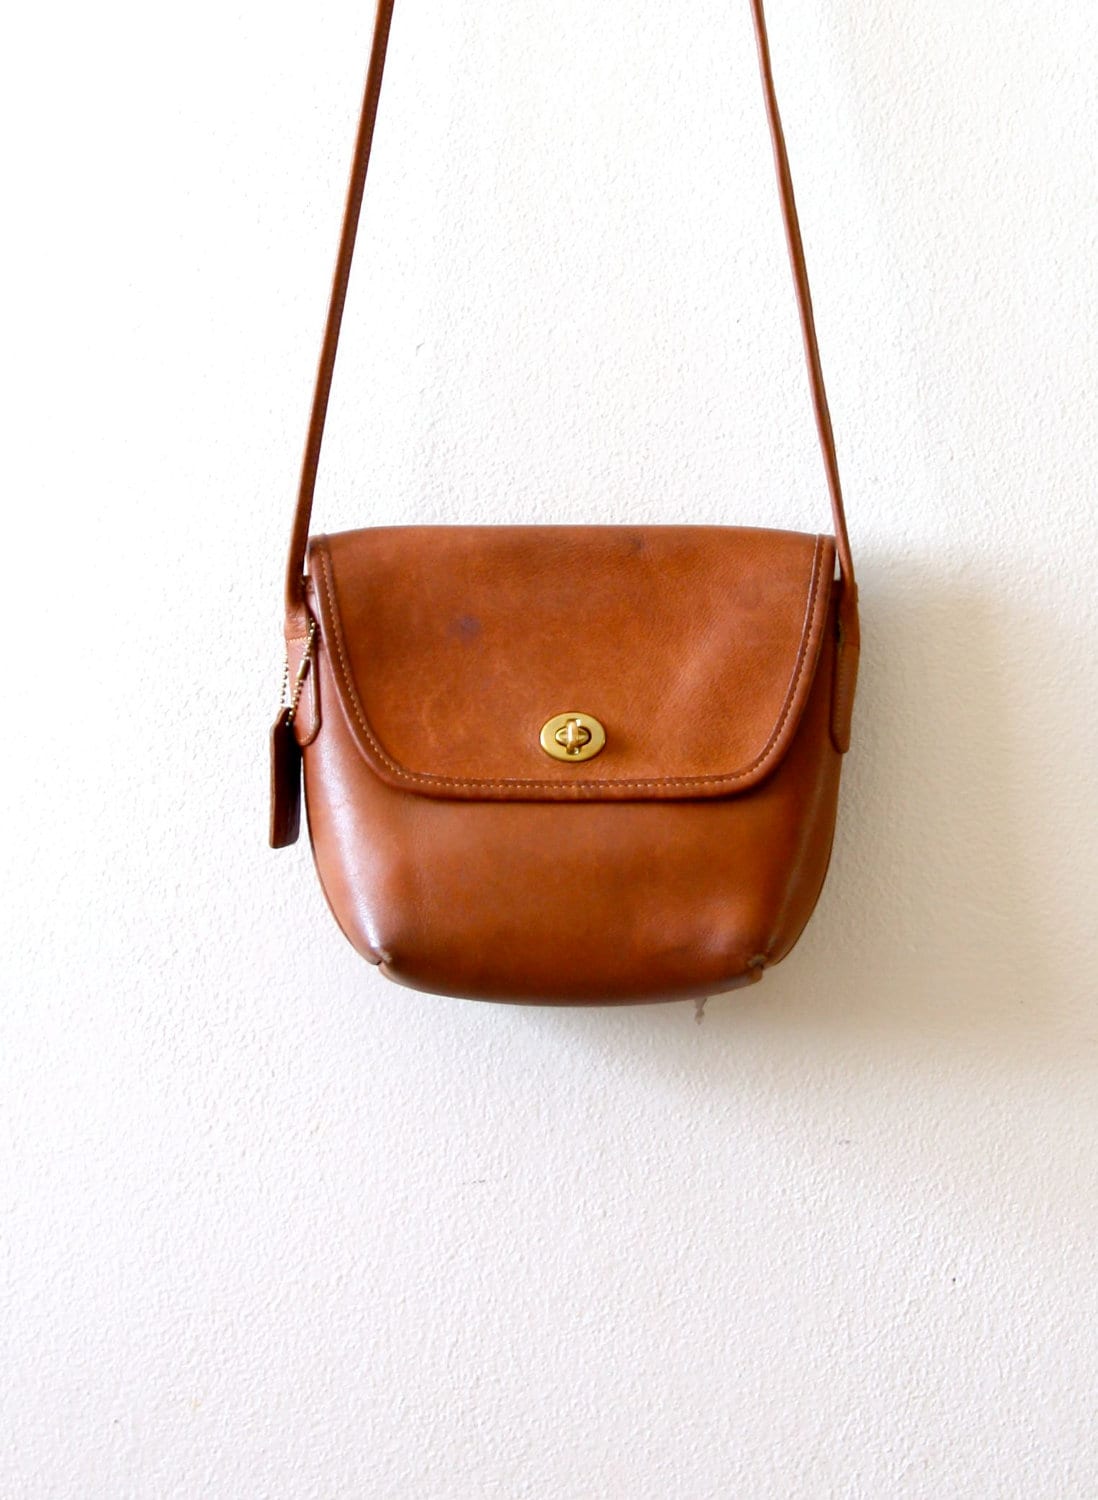 Vintage Coach small brown purse